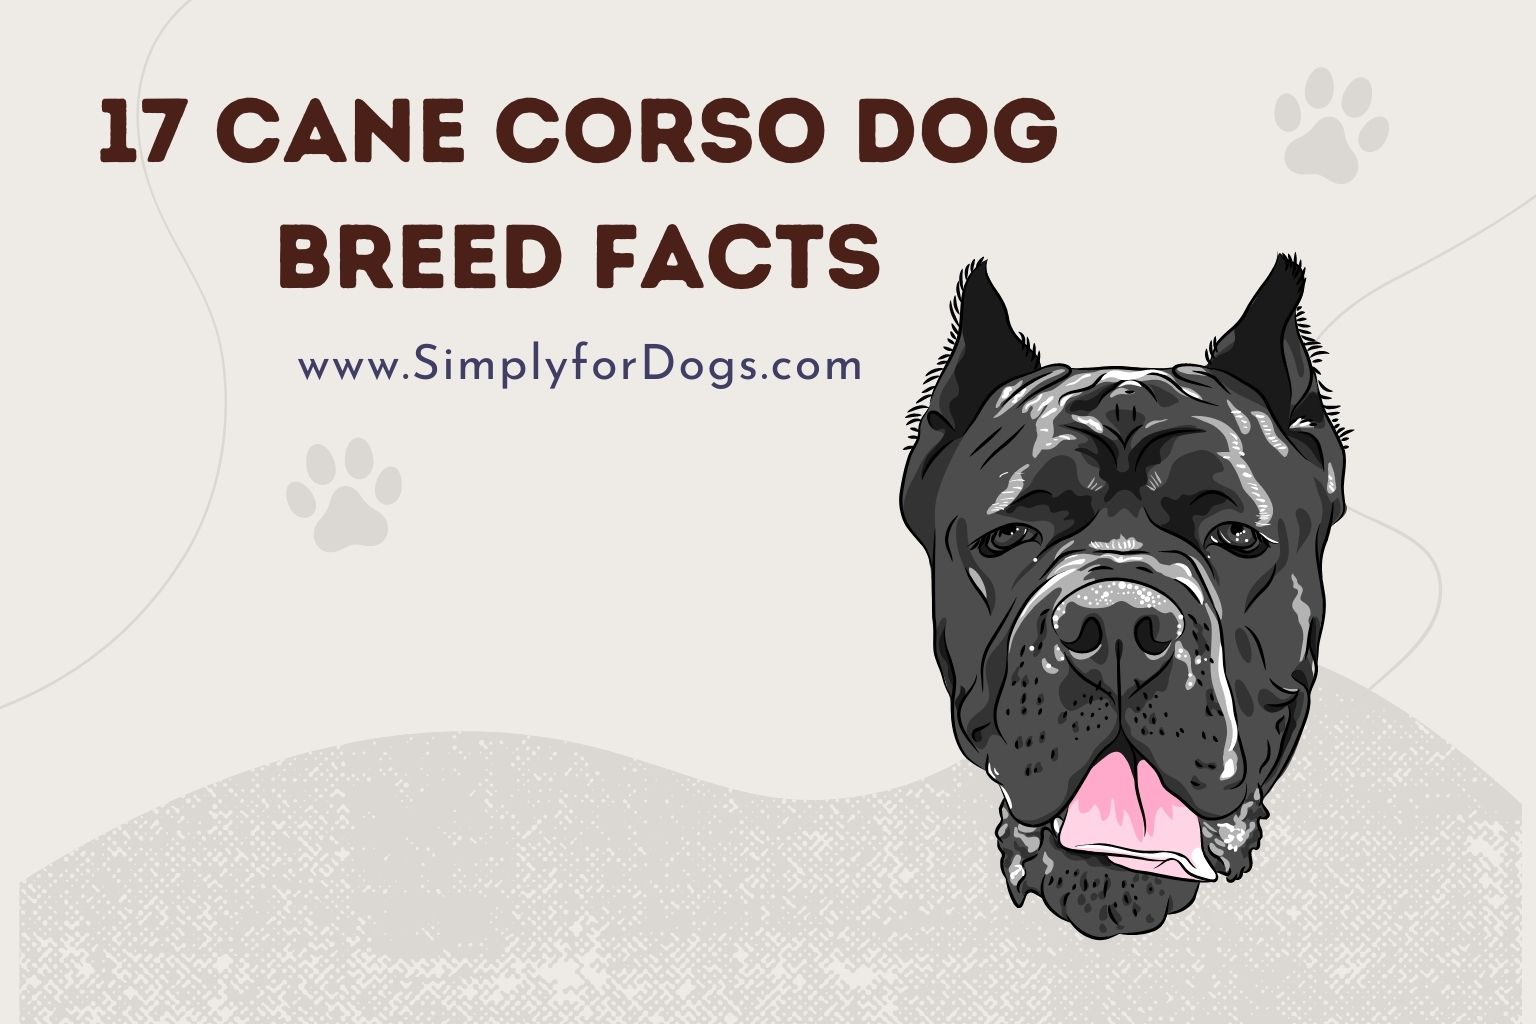 17 Cane Corso Dog Breed Facts